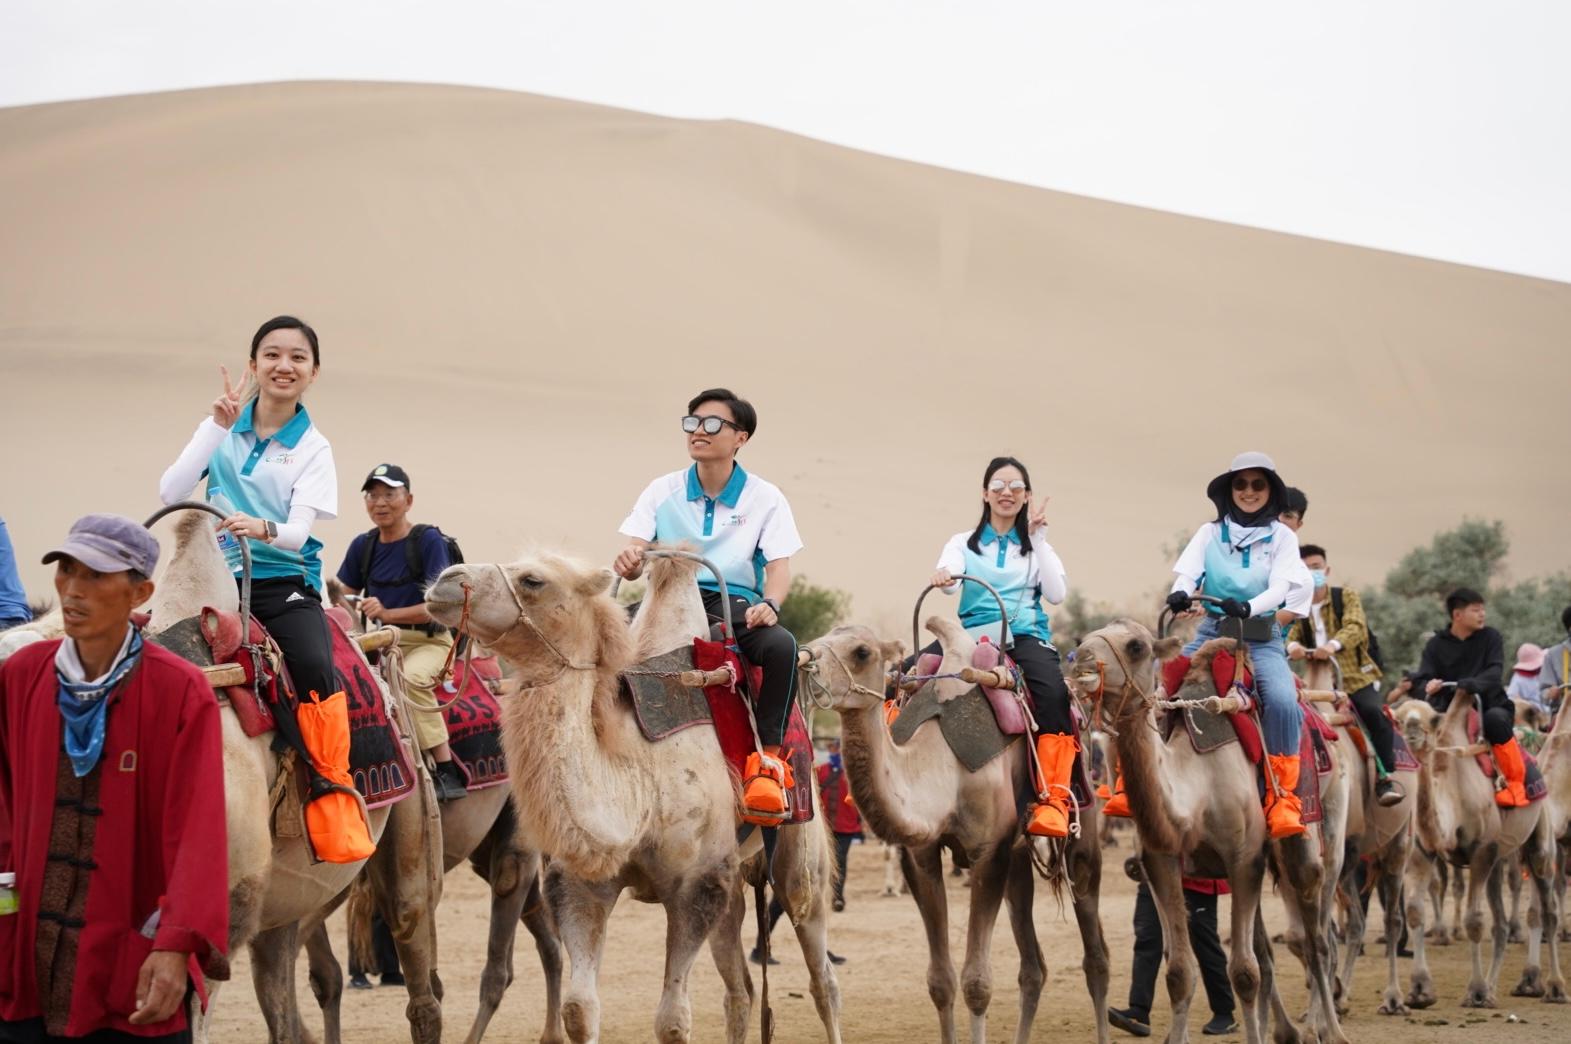 「Customs YES」团员于七月十一日骑骆驼前往鸣沙山月牙泉，欣赏国家沙漠景观。

